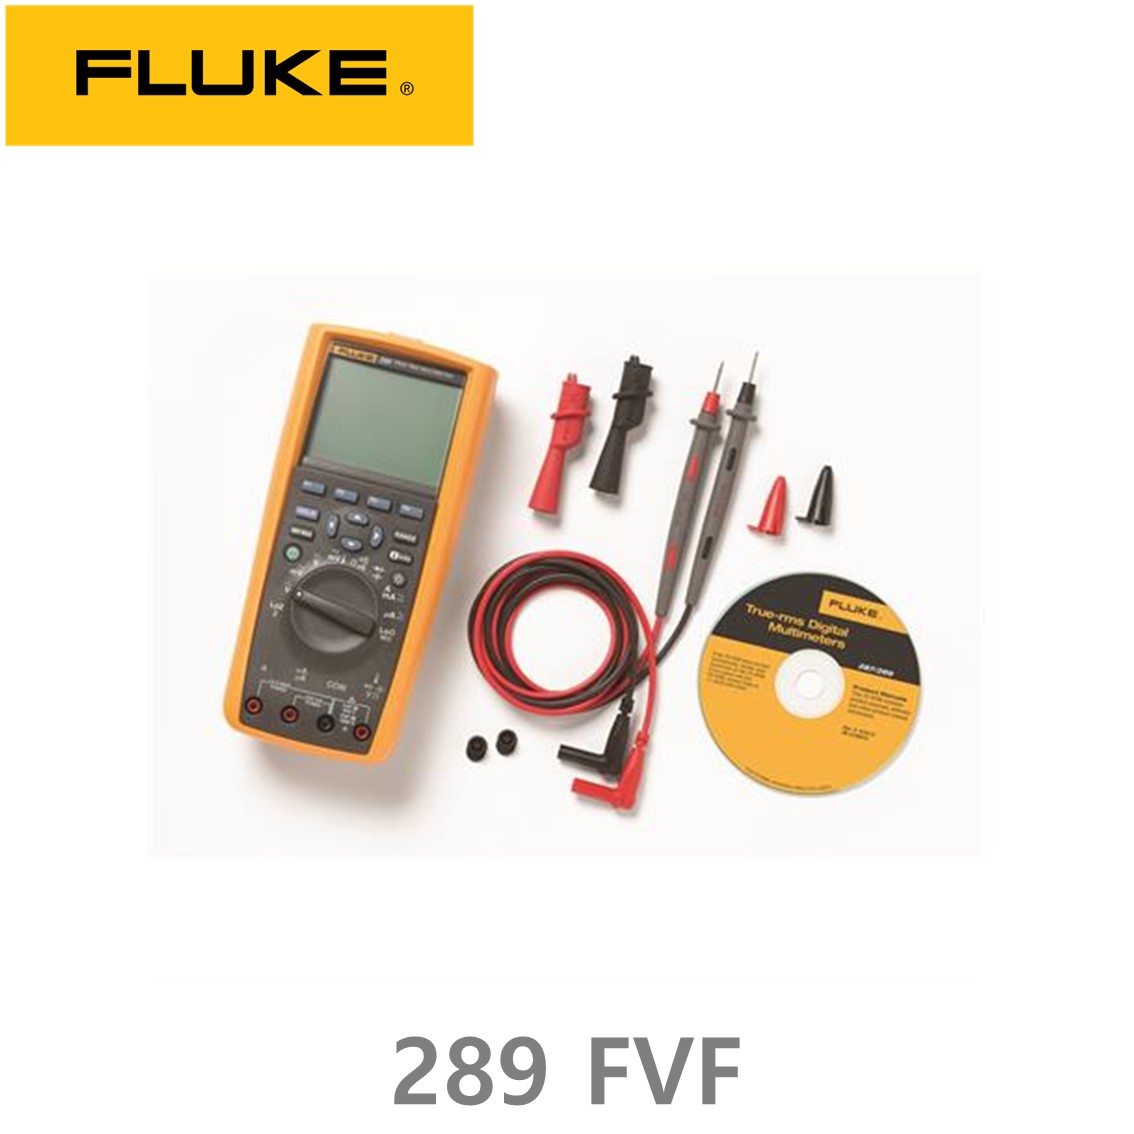 [ FLUKE 289 FVF ] 플루크 디지털멀티미터 콤보키트 (S/W포함)